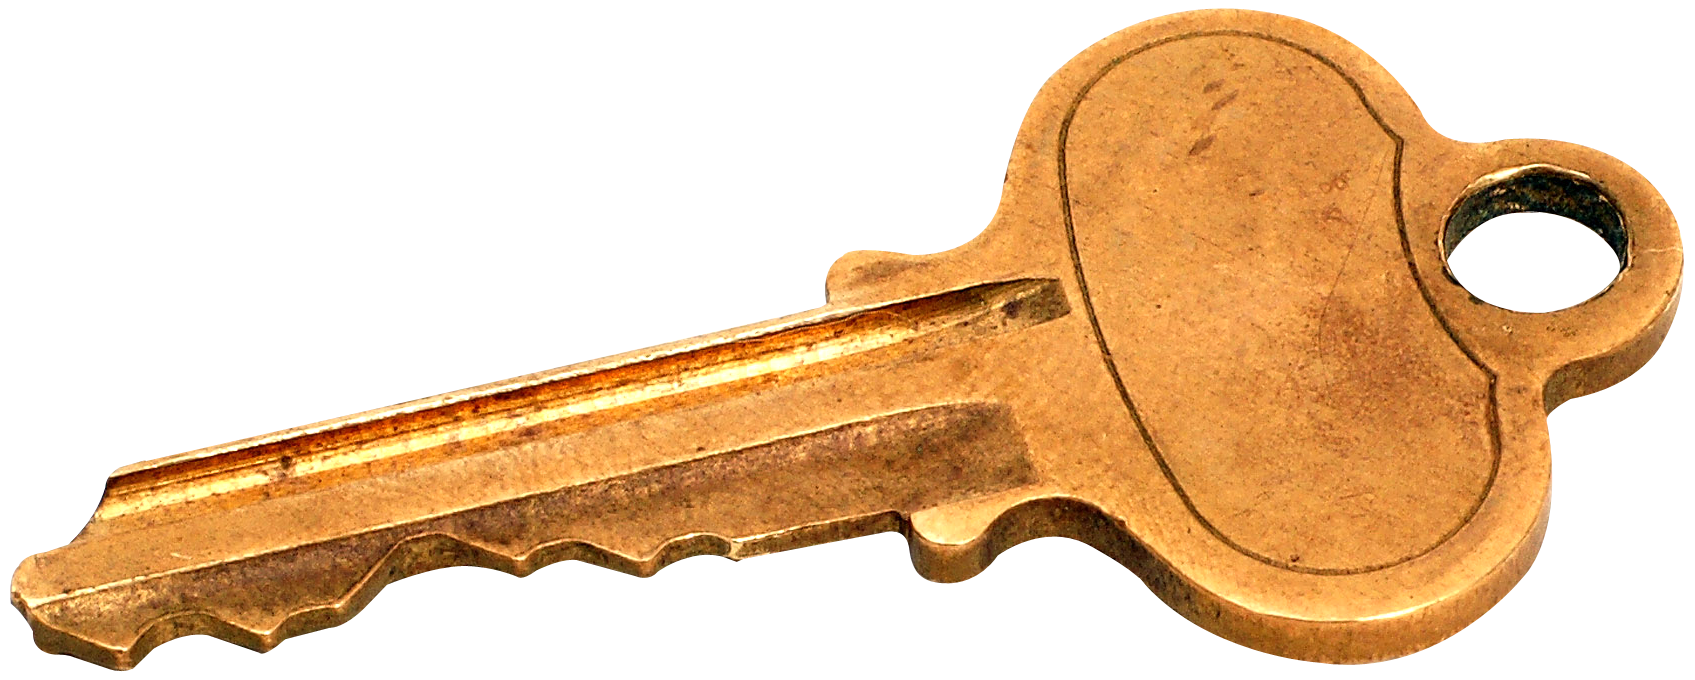 free images of keys